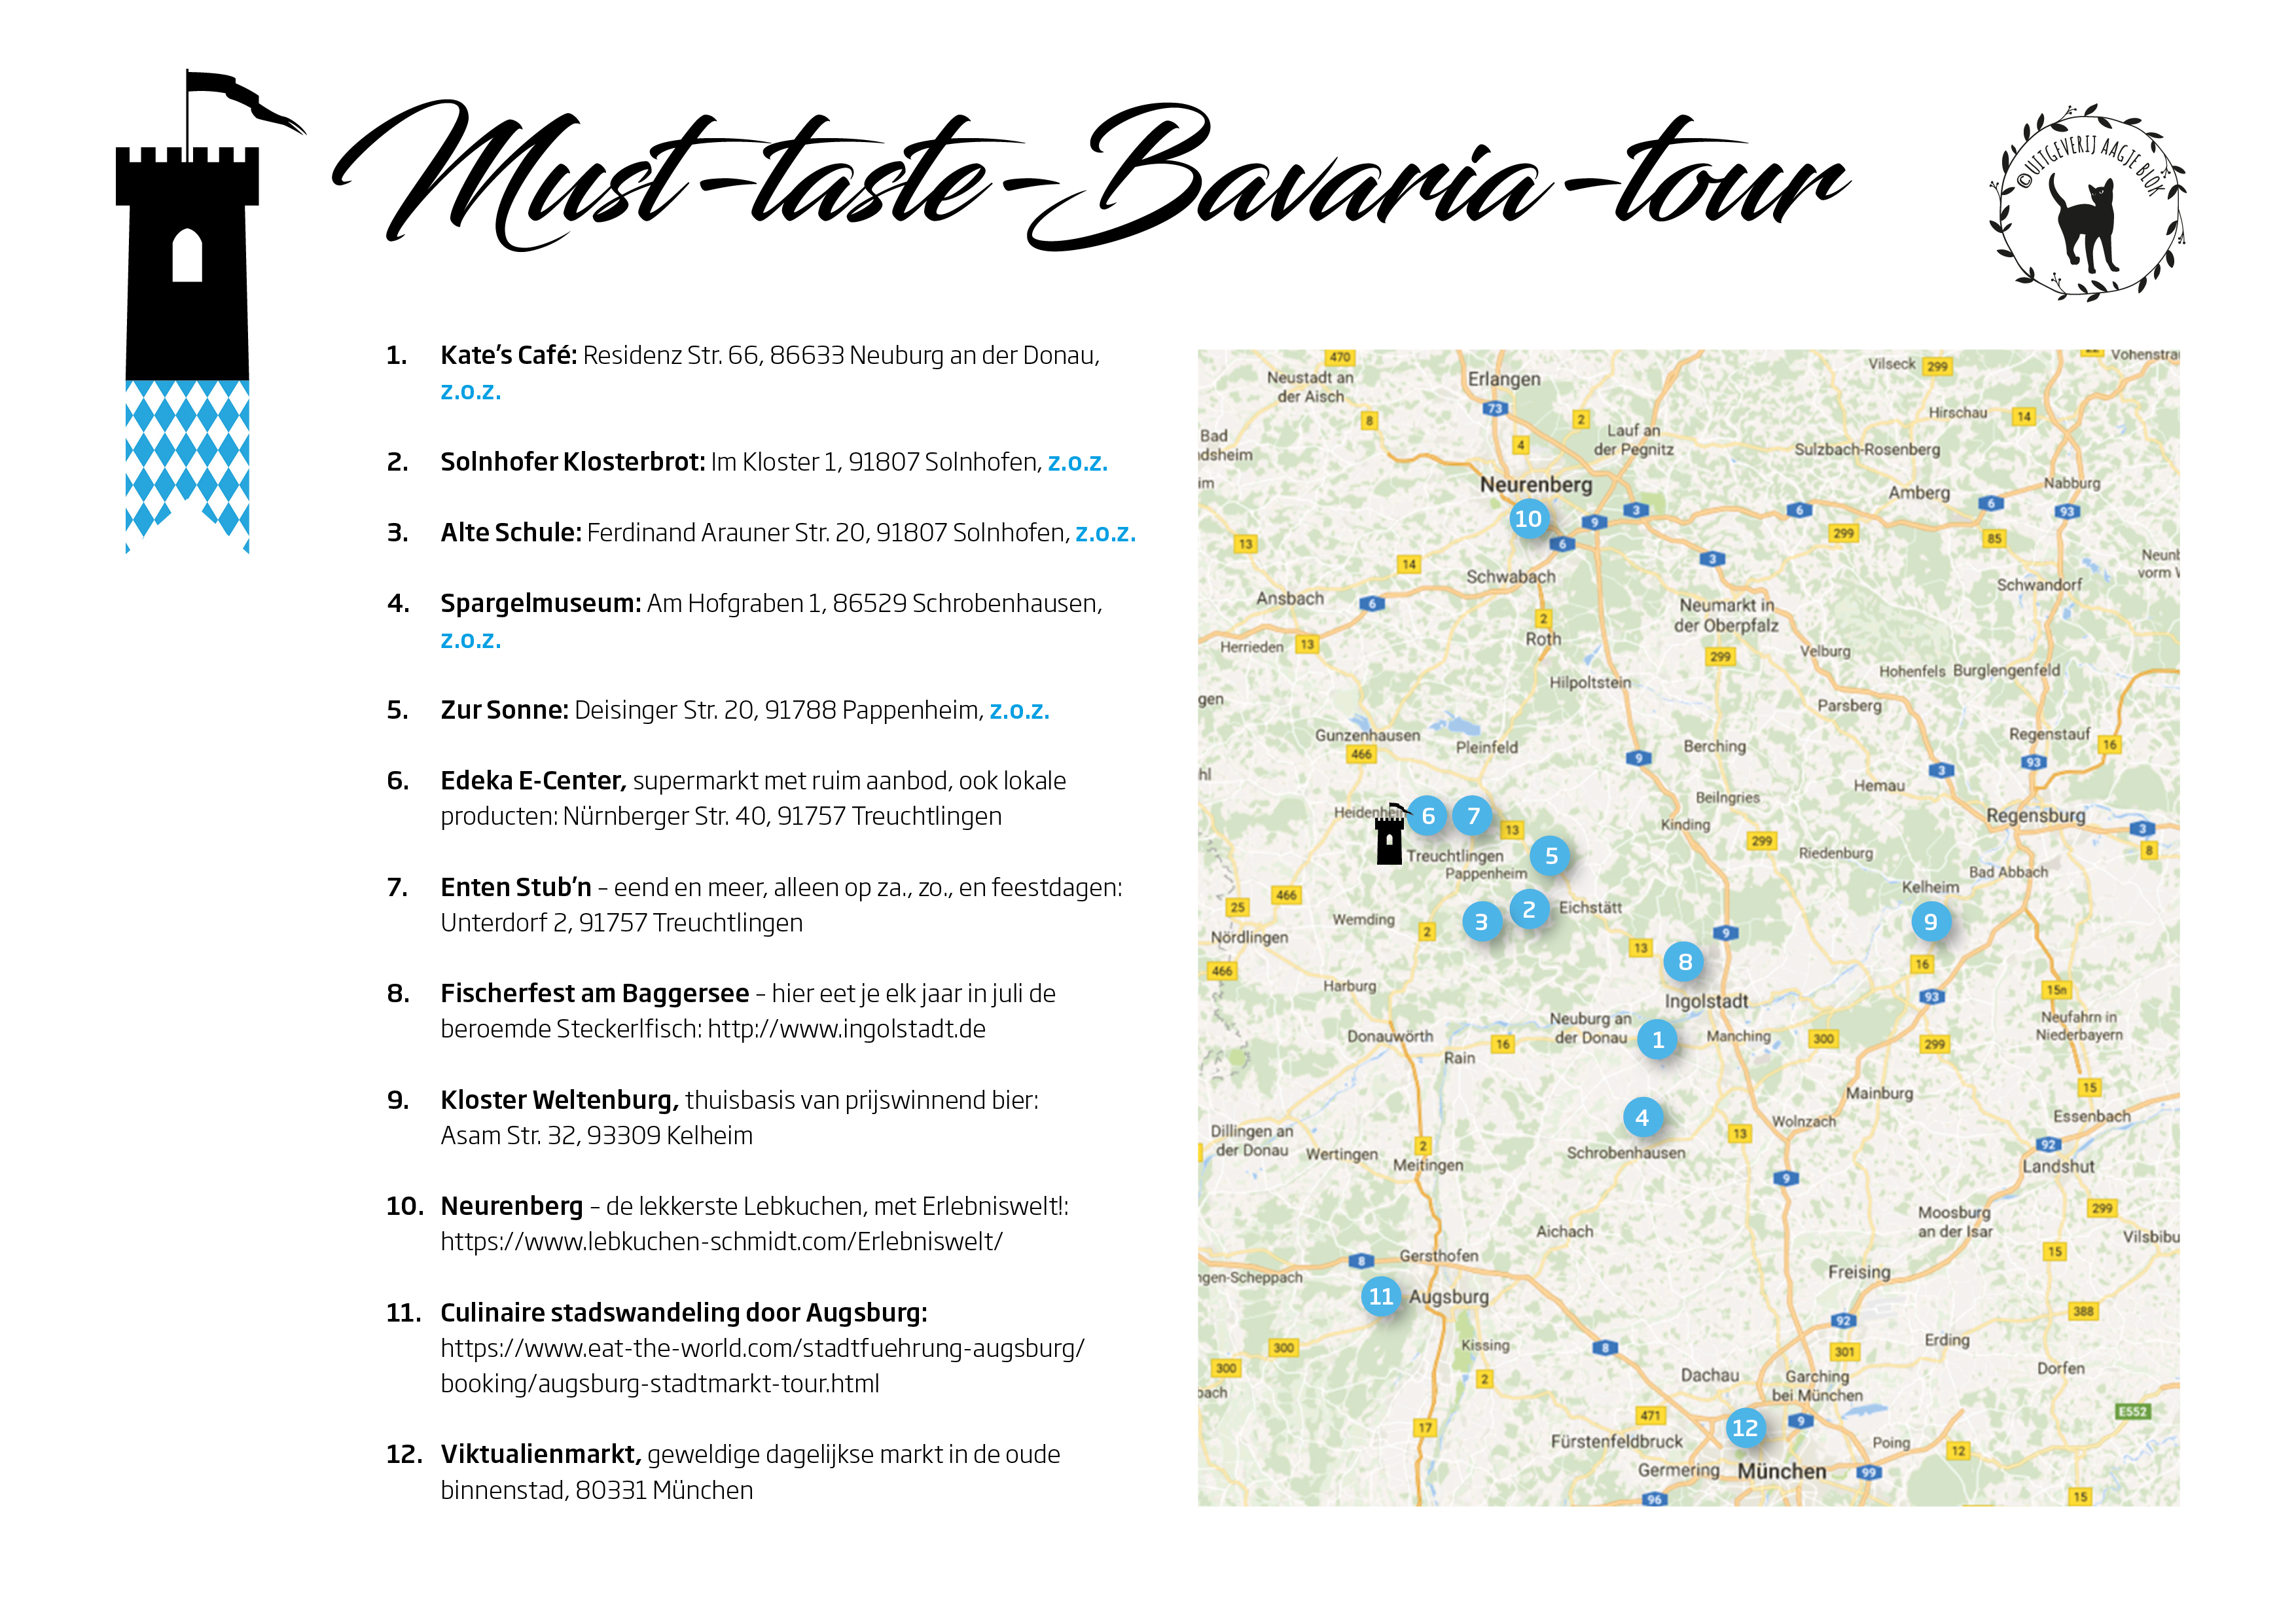 Koch & Must-taste-Bavaria-tour